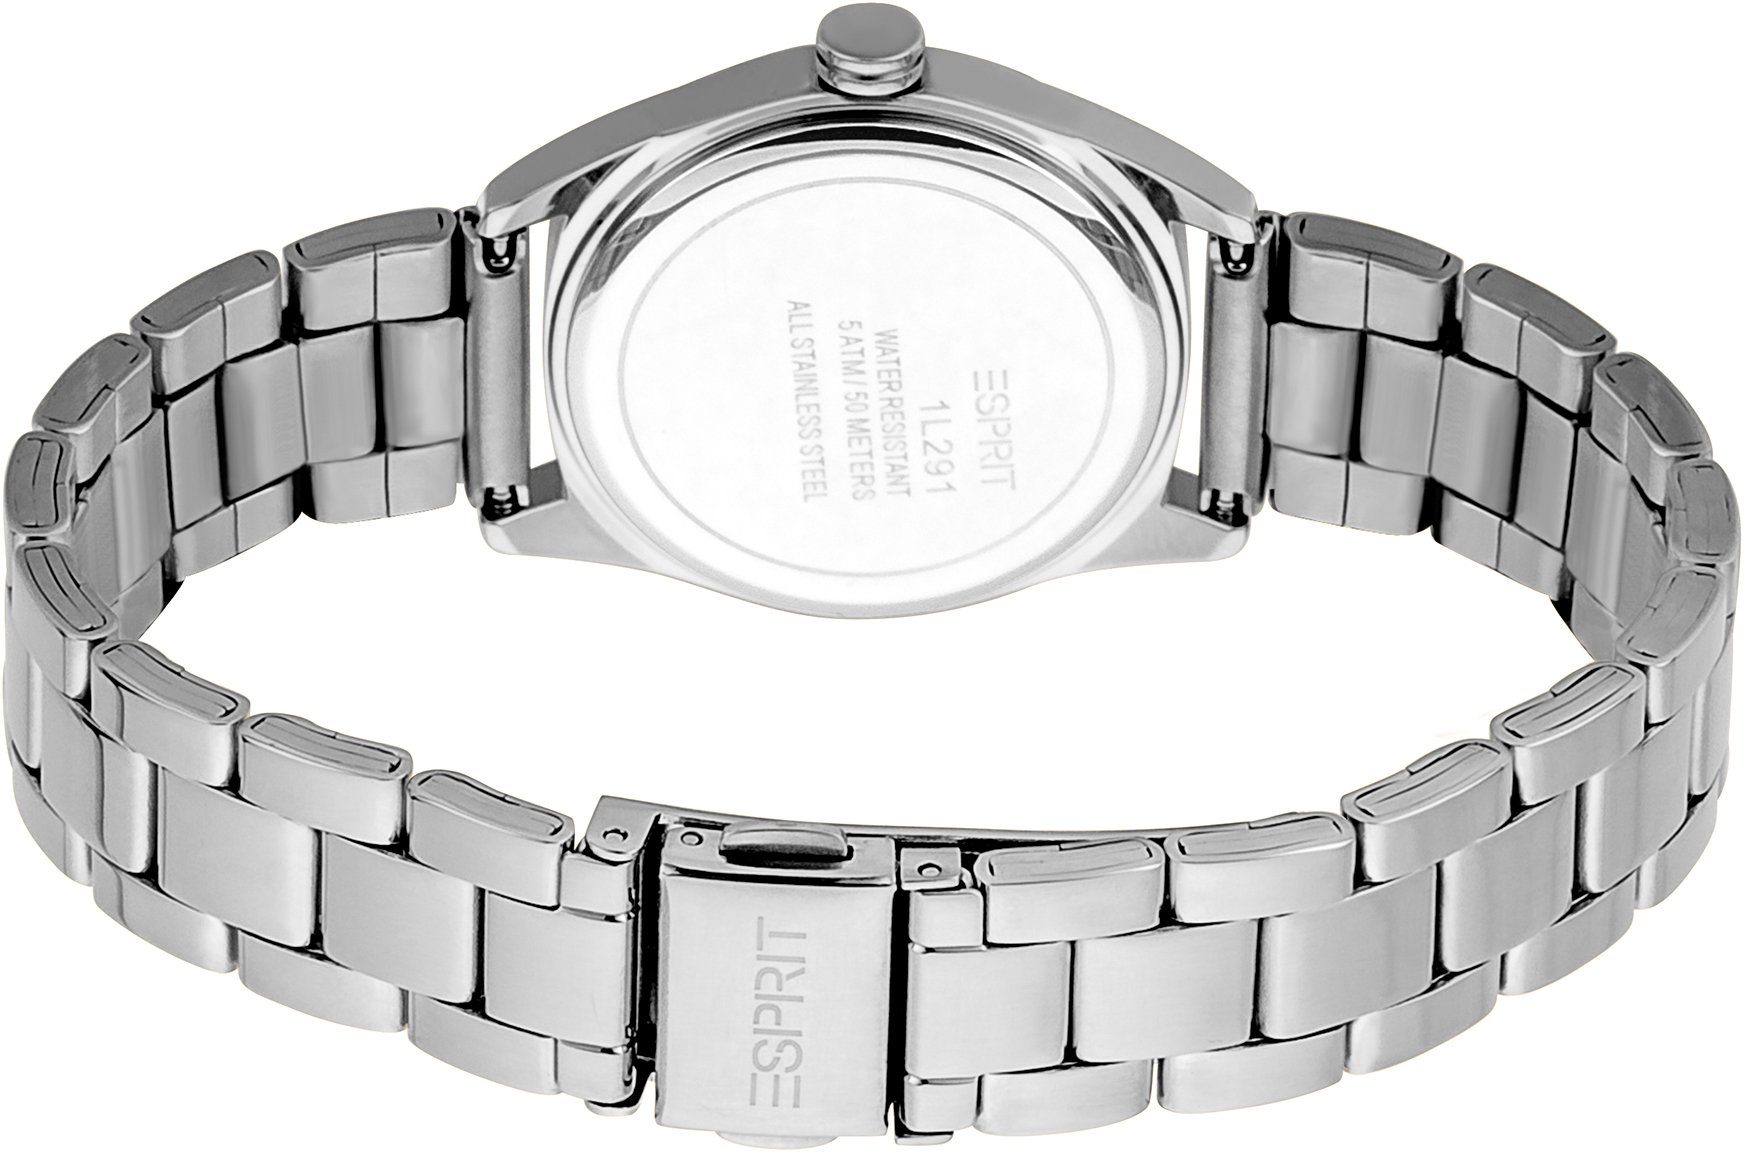 Damen Uhren Esprit Quarzuhr Charlie, ES1L291M0075